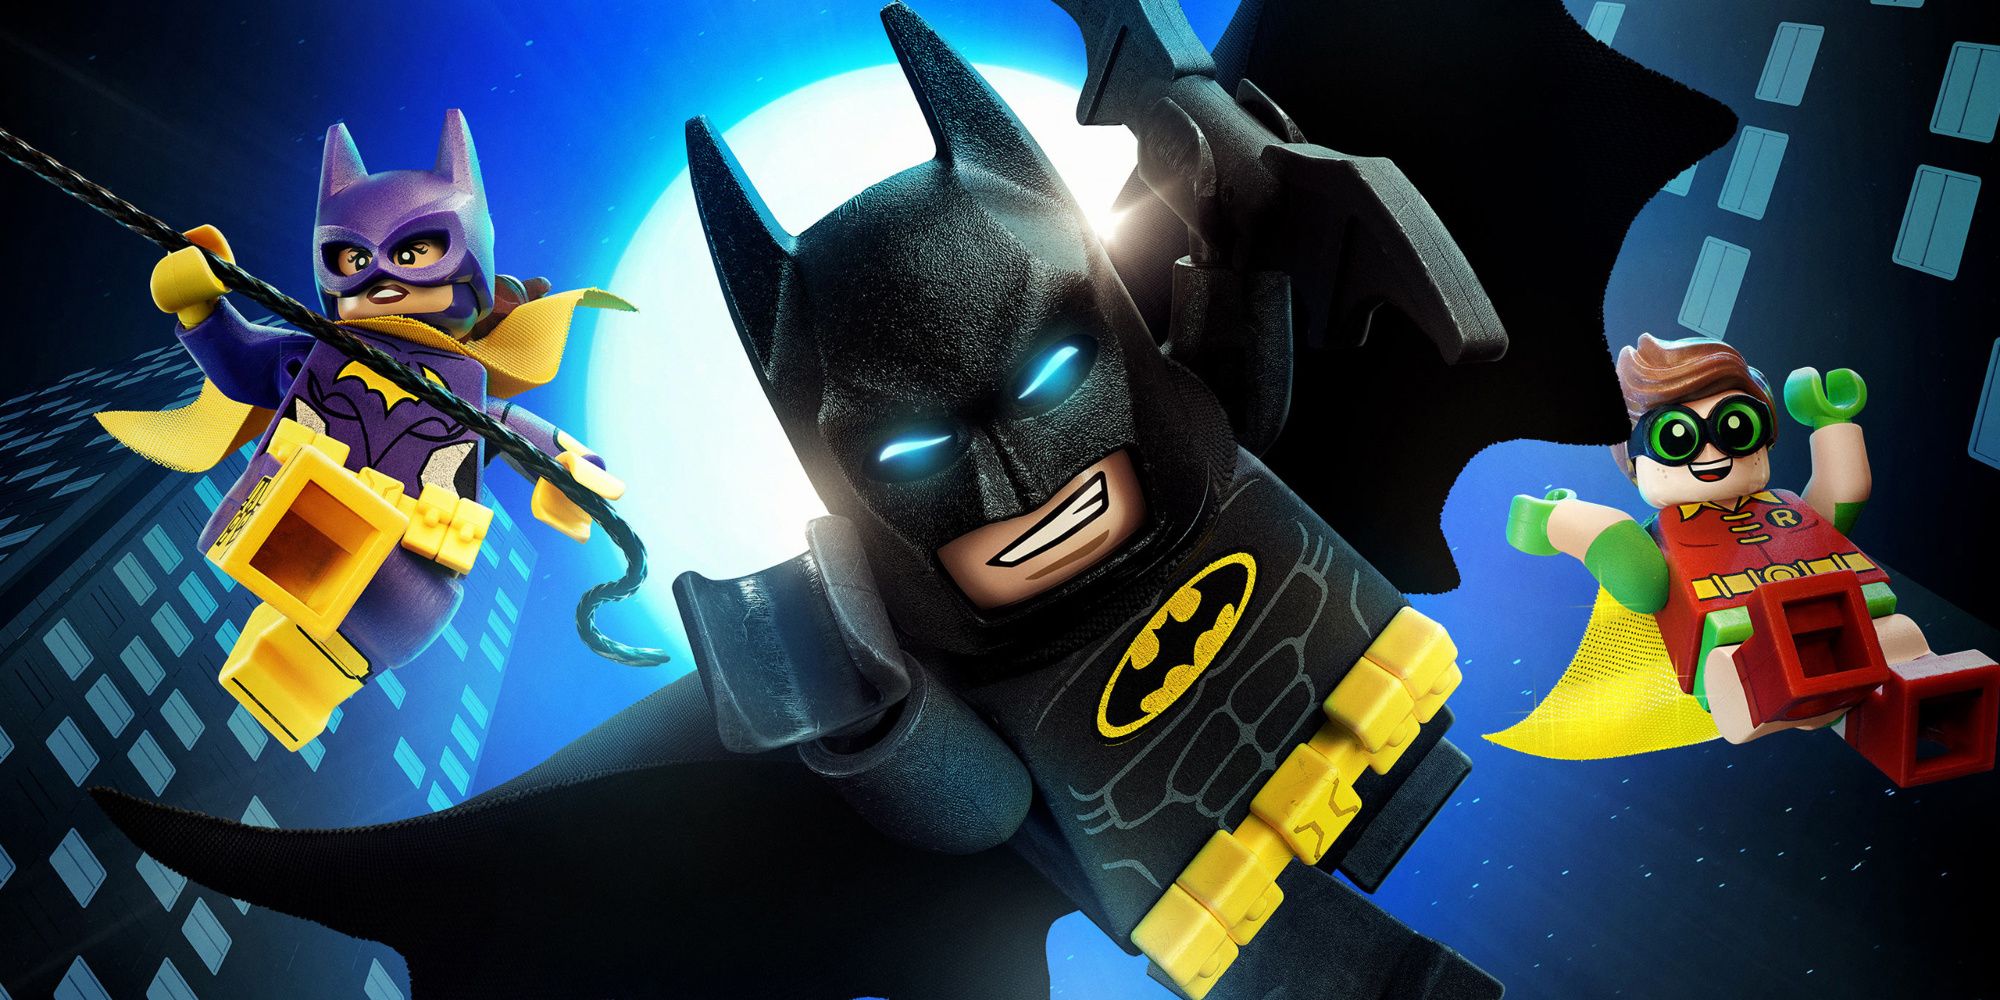 Deep Focus: The Lego Batman Movie